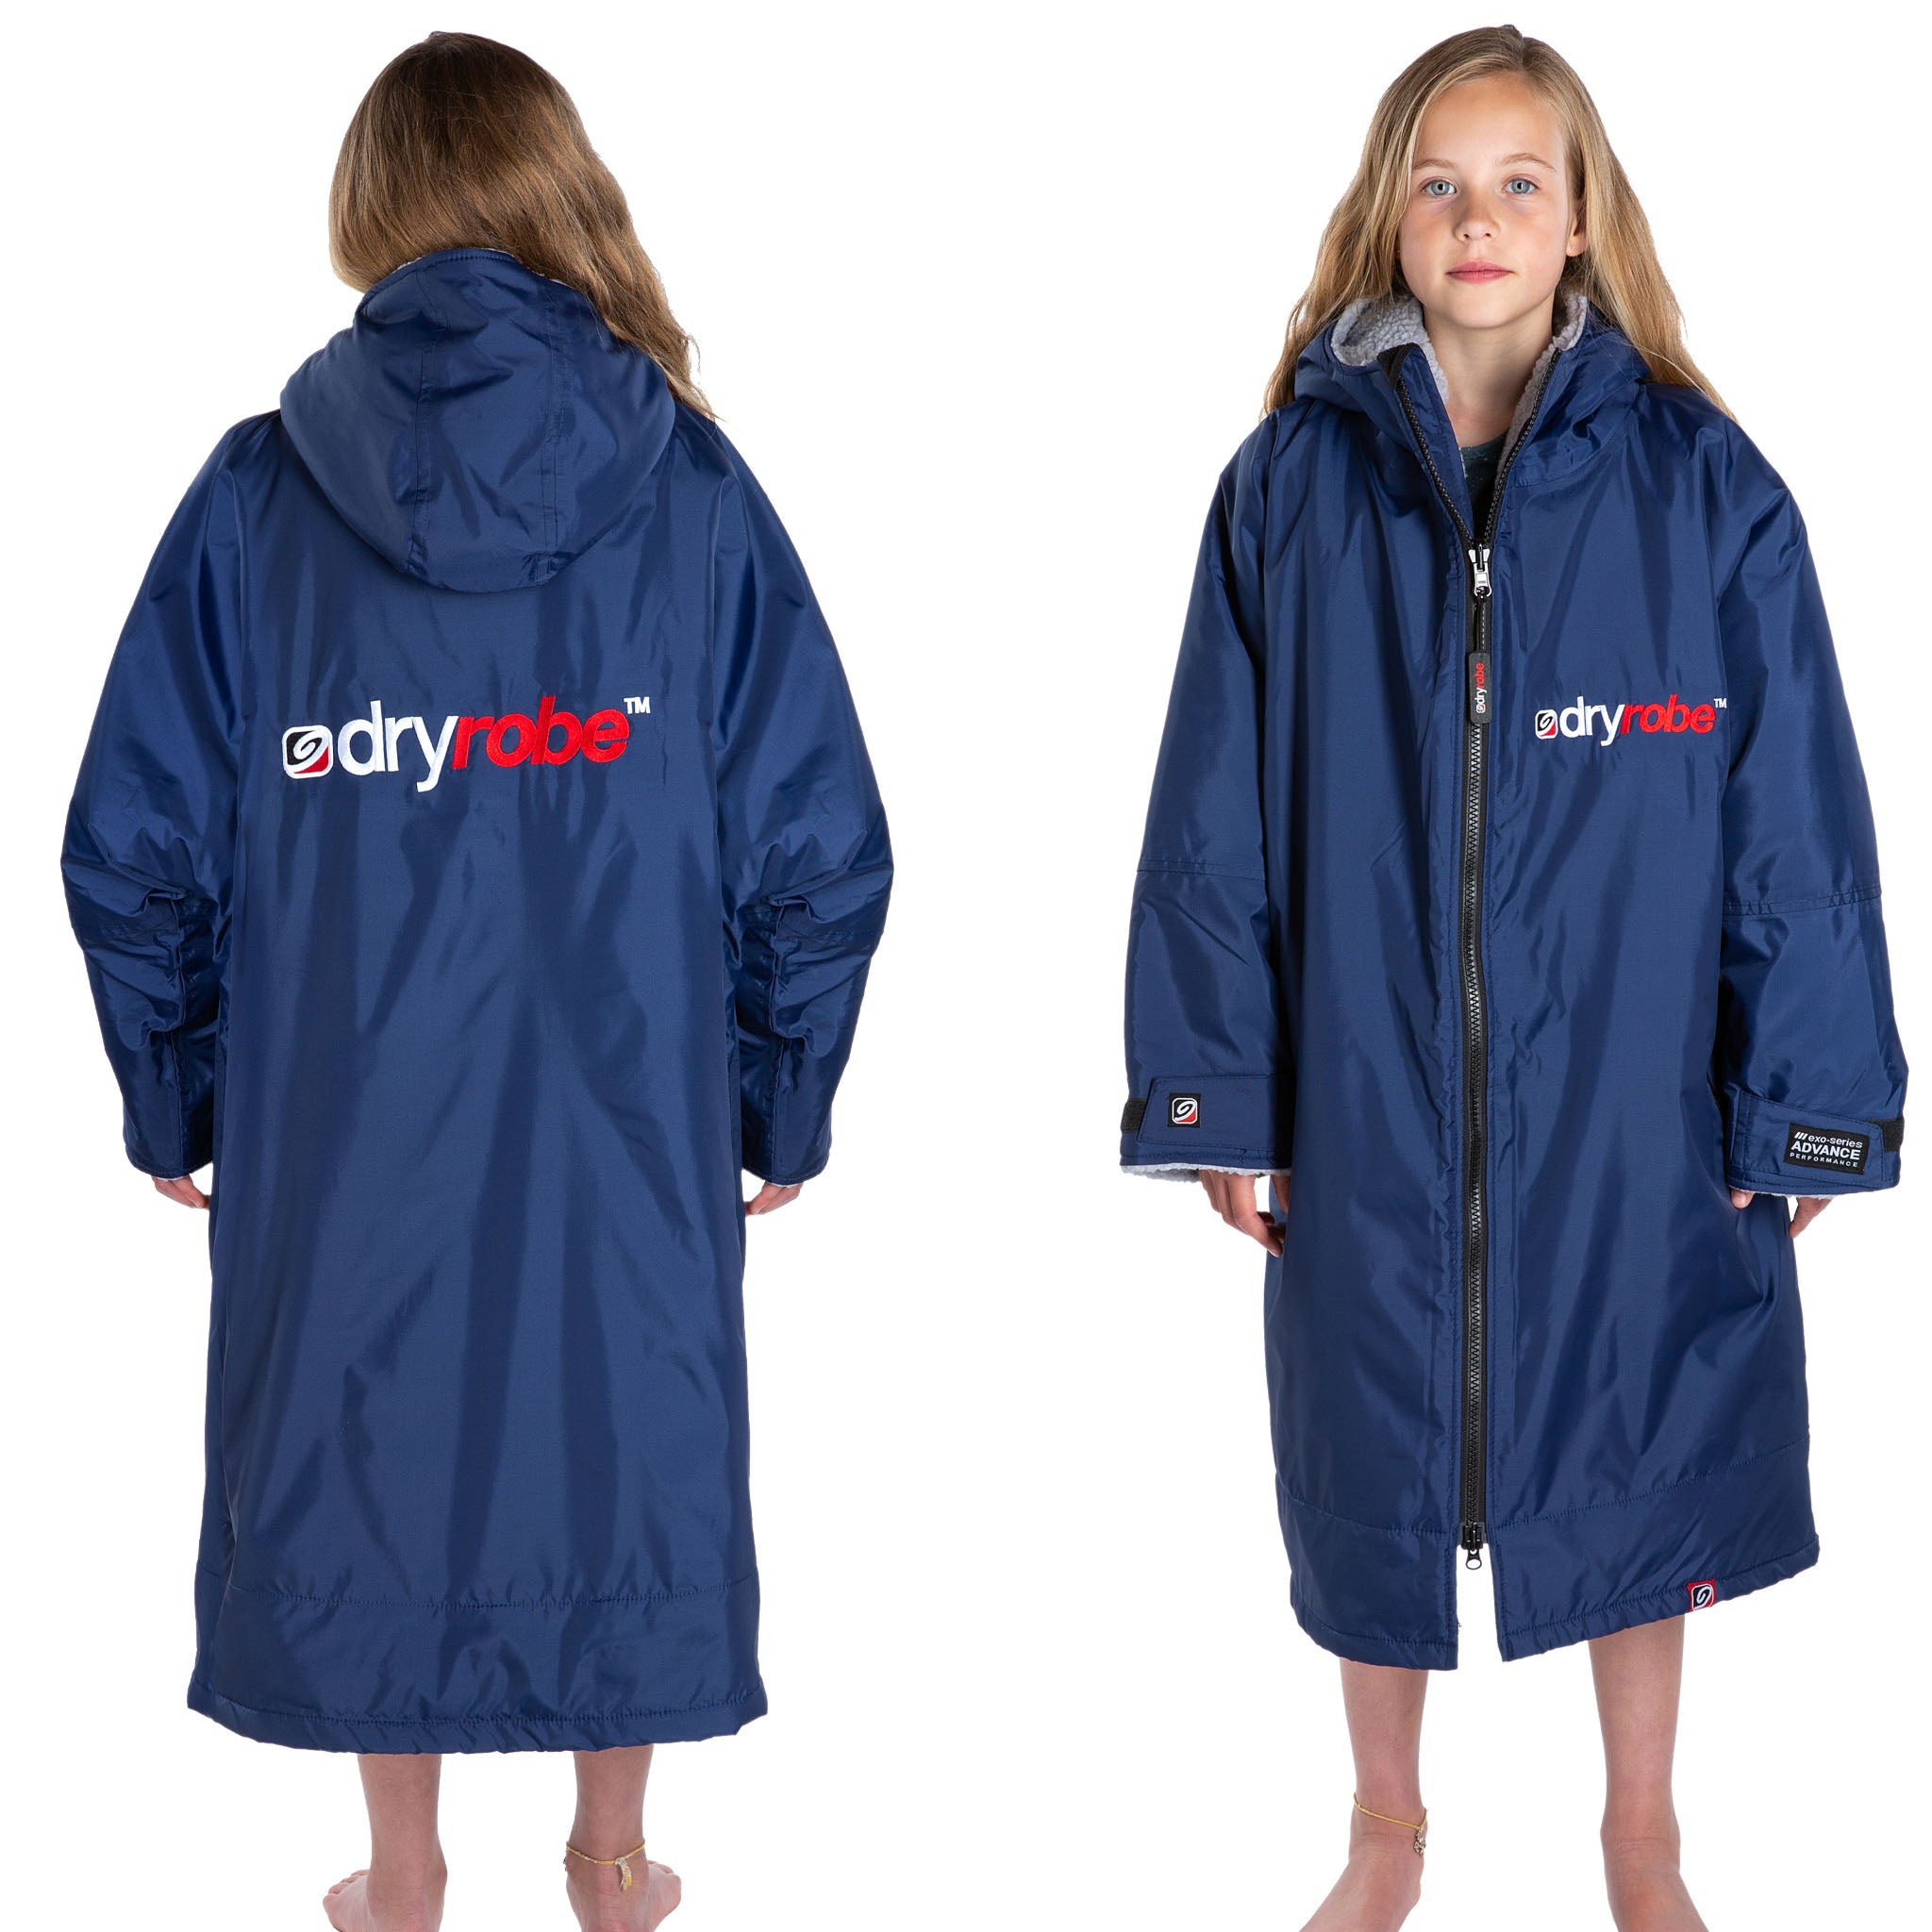 dryrobe Kid's Advance Long Sleeve Outdoor Changing Robe Navy/Grey views